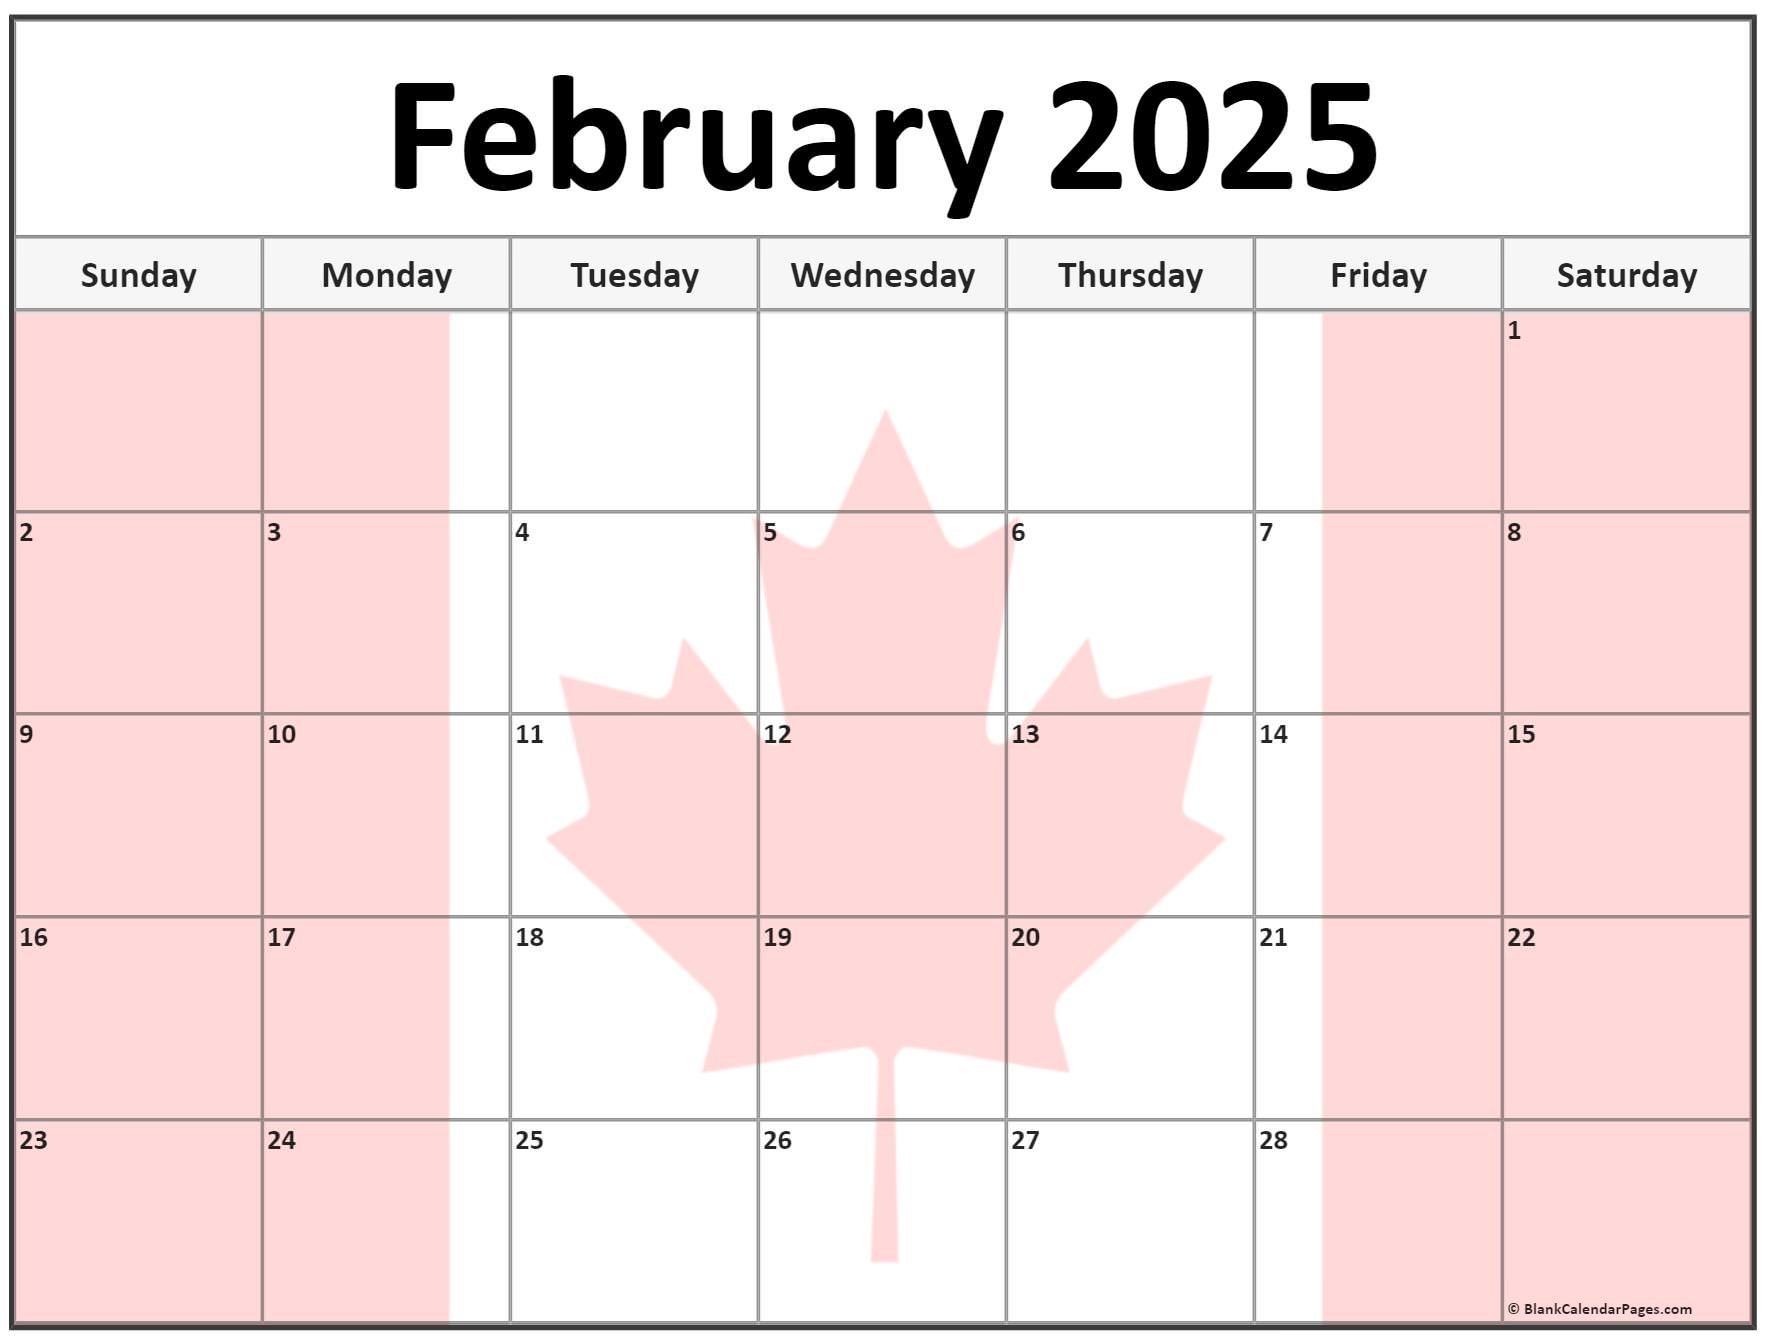 February 2025 Calendar Canada